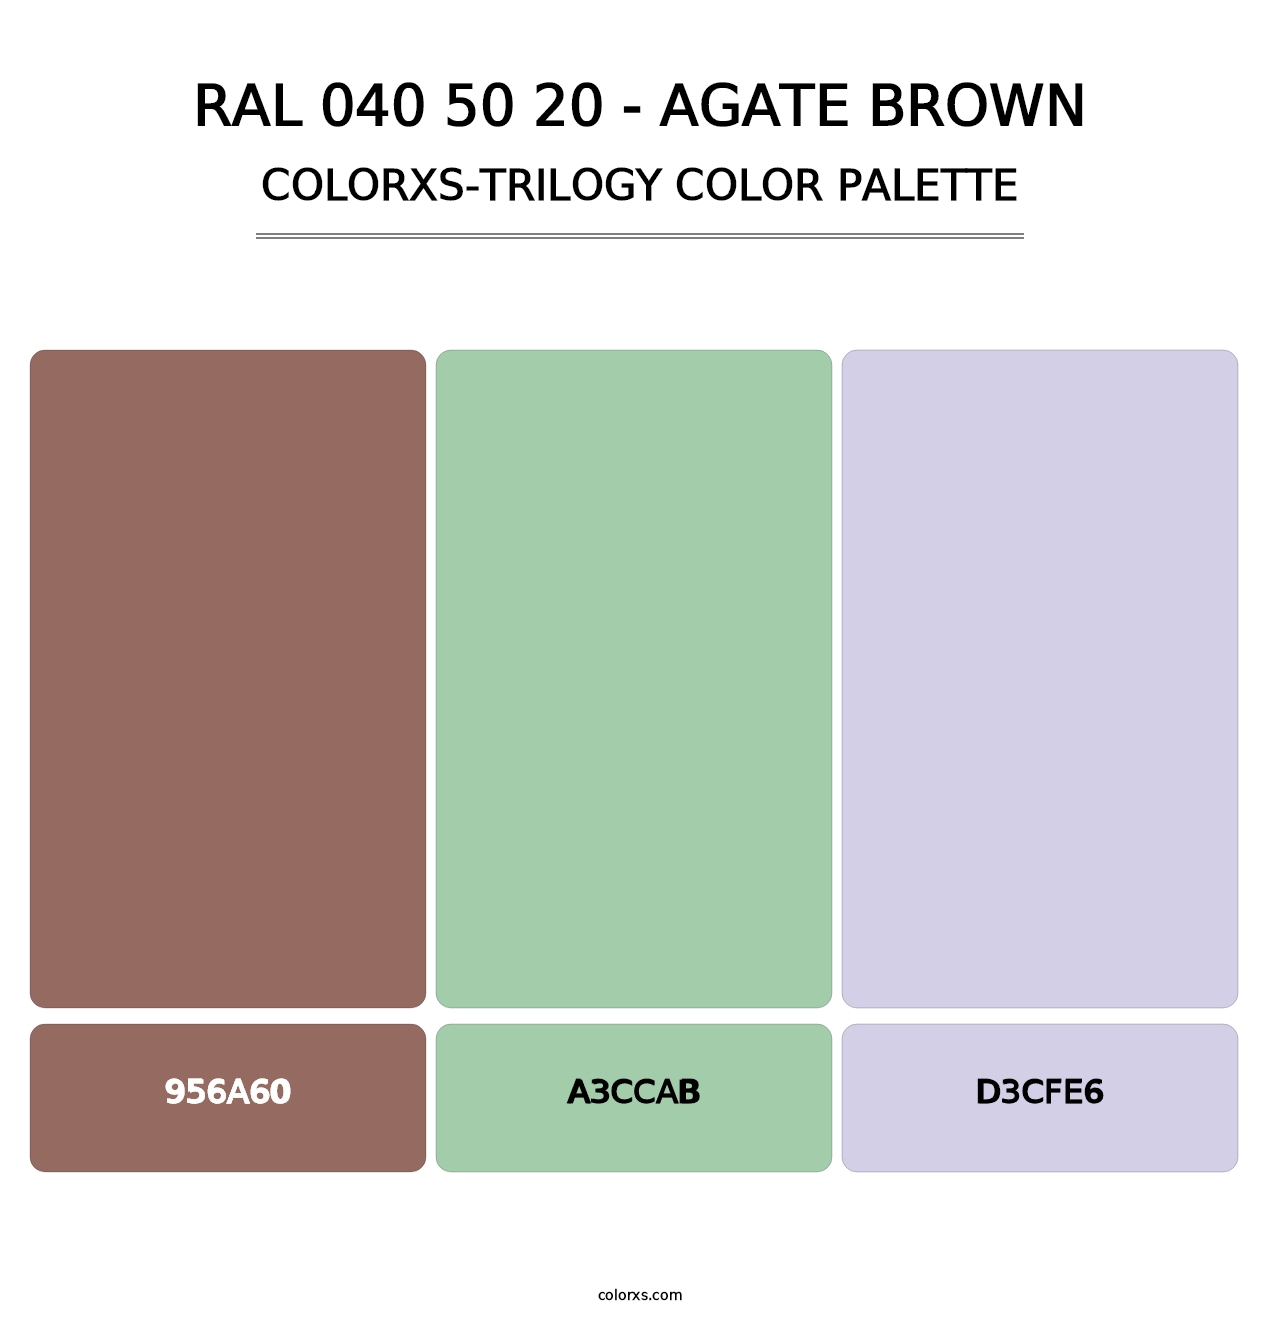 RAL 040 50 20 - Agate Brown - Colorxs Trilogy Palette